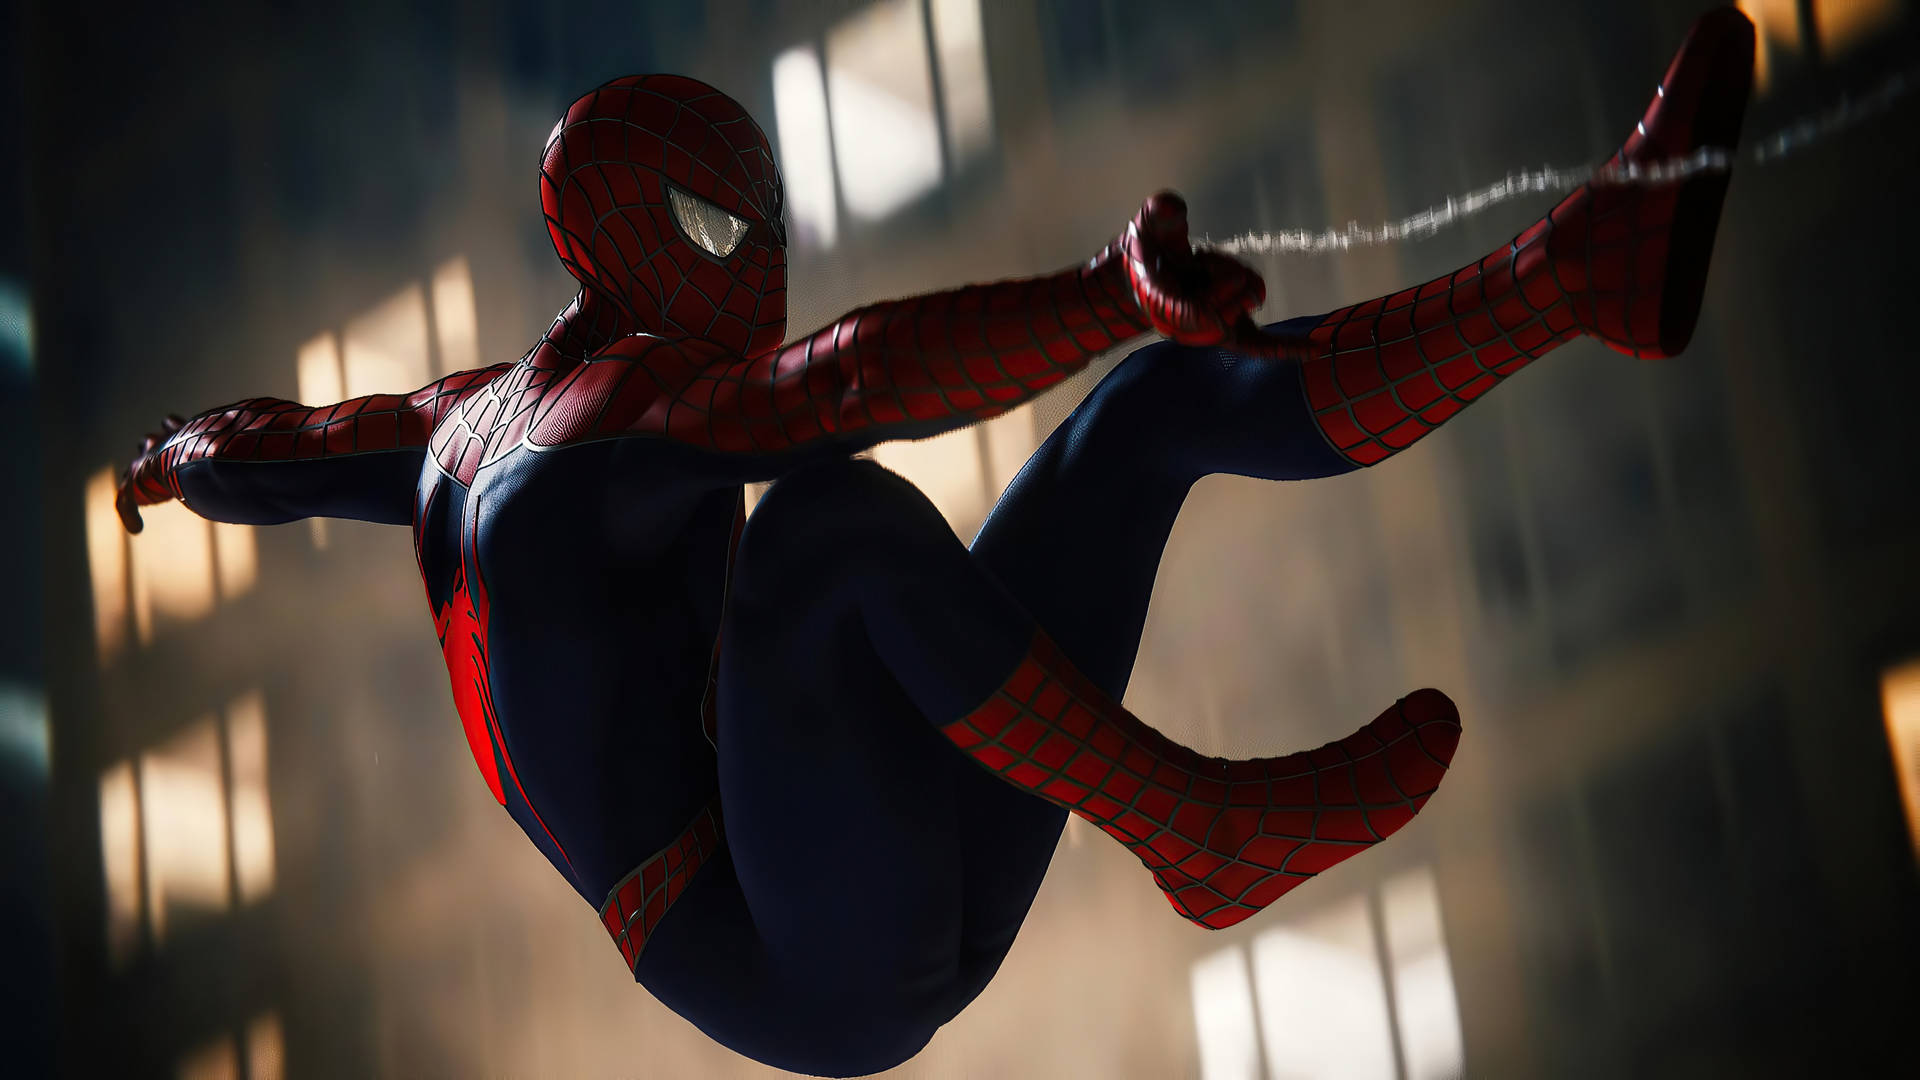 Spider-man Ps4 Shooting Webs In Dark Wallpaper